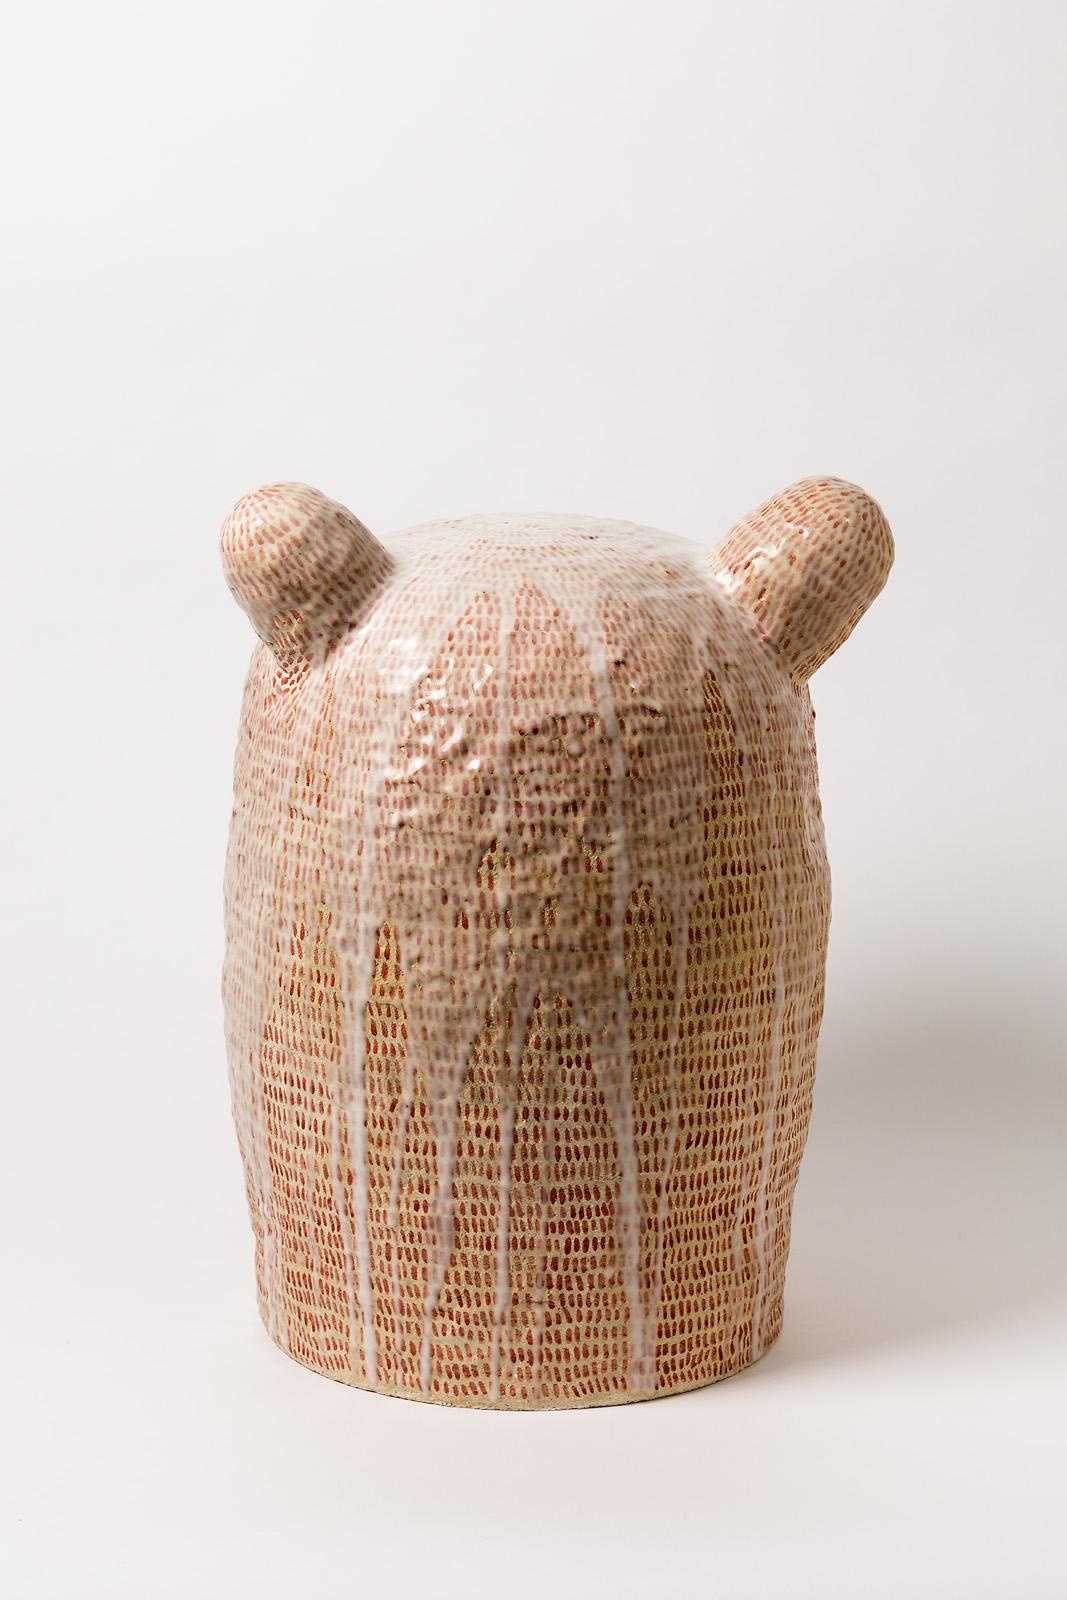 Contemporary Ceramic Sculpture by Laurent Dufour, 2020